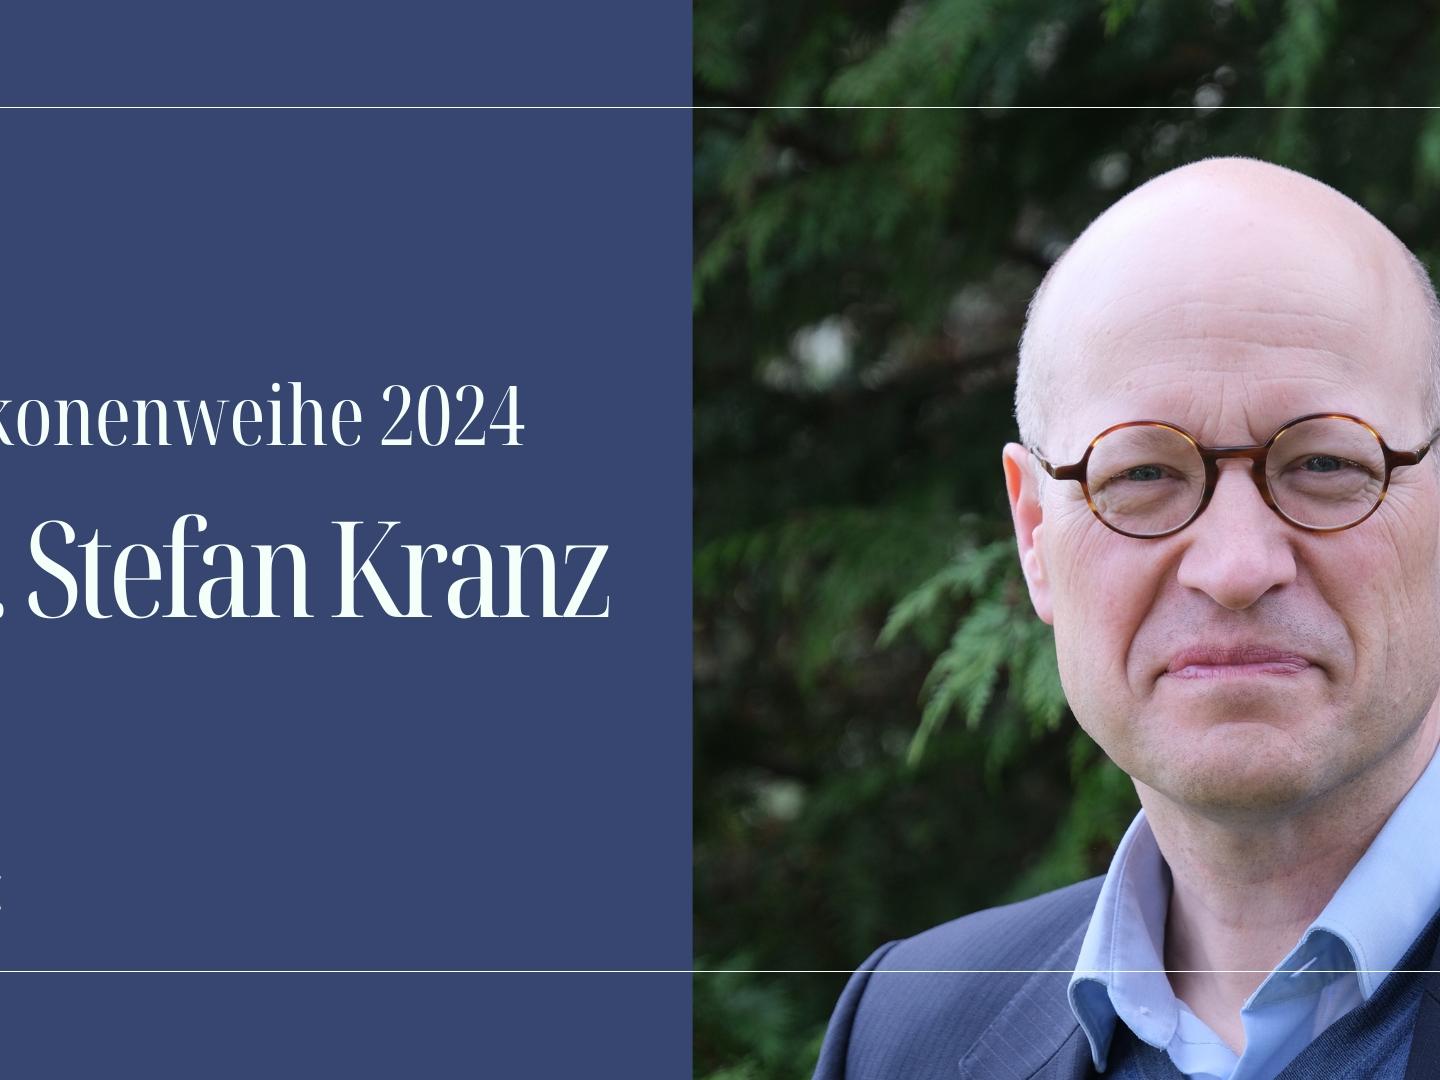 Dr. Stefan Kranz